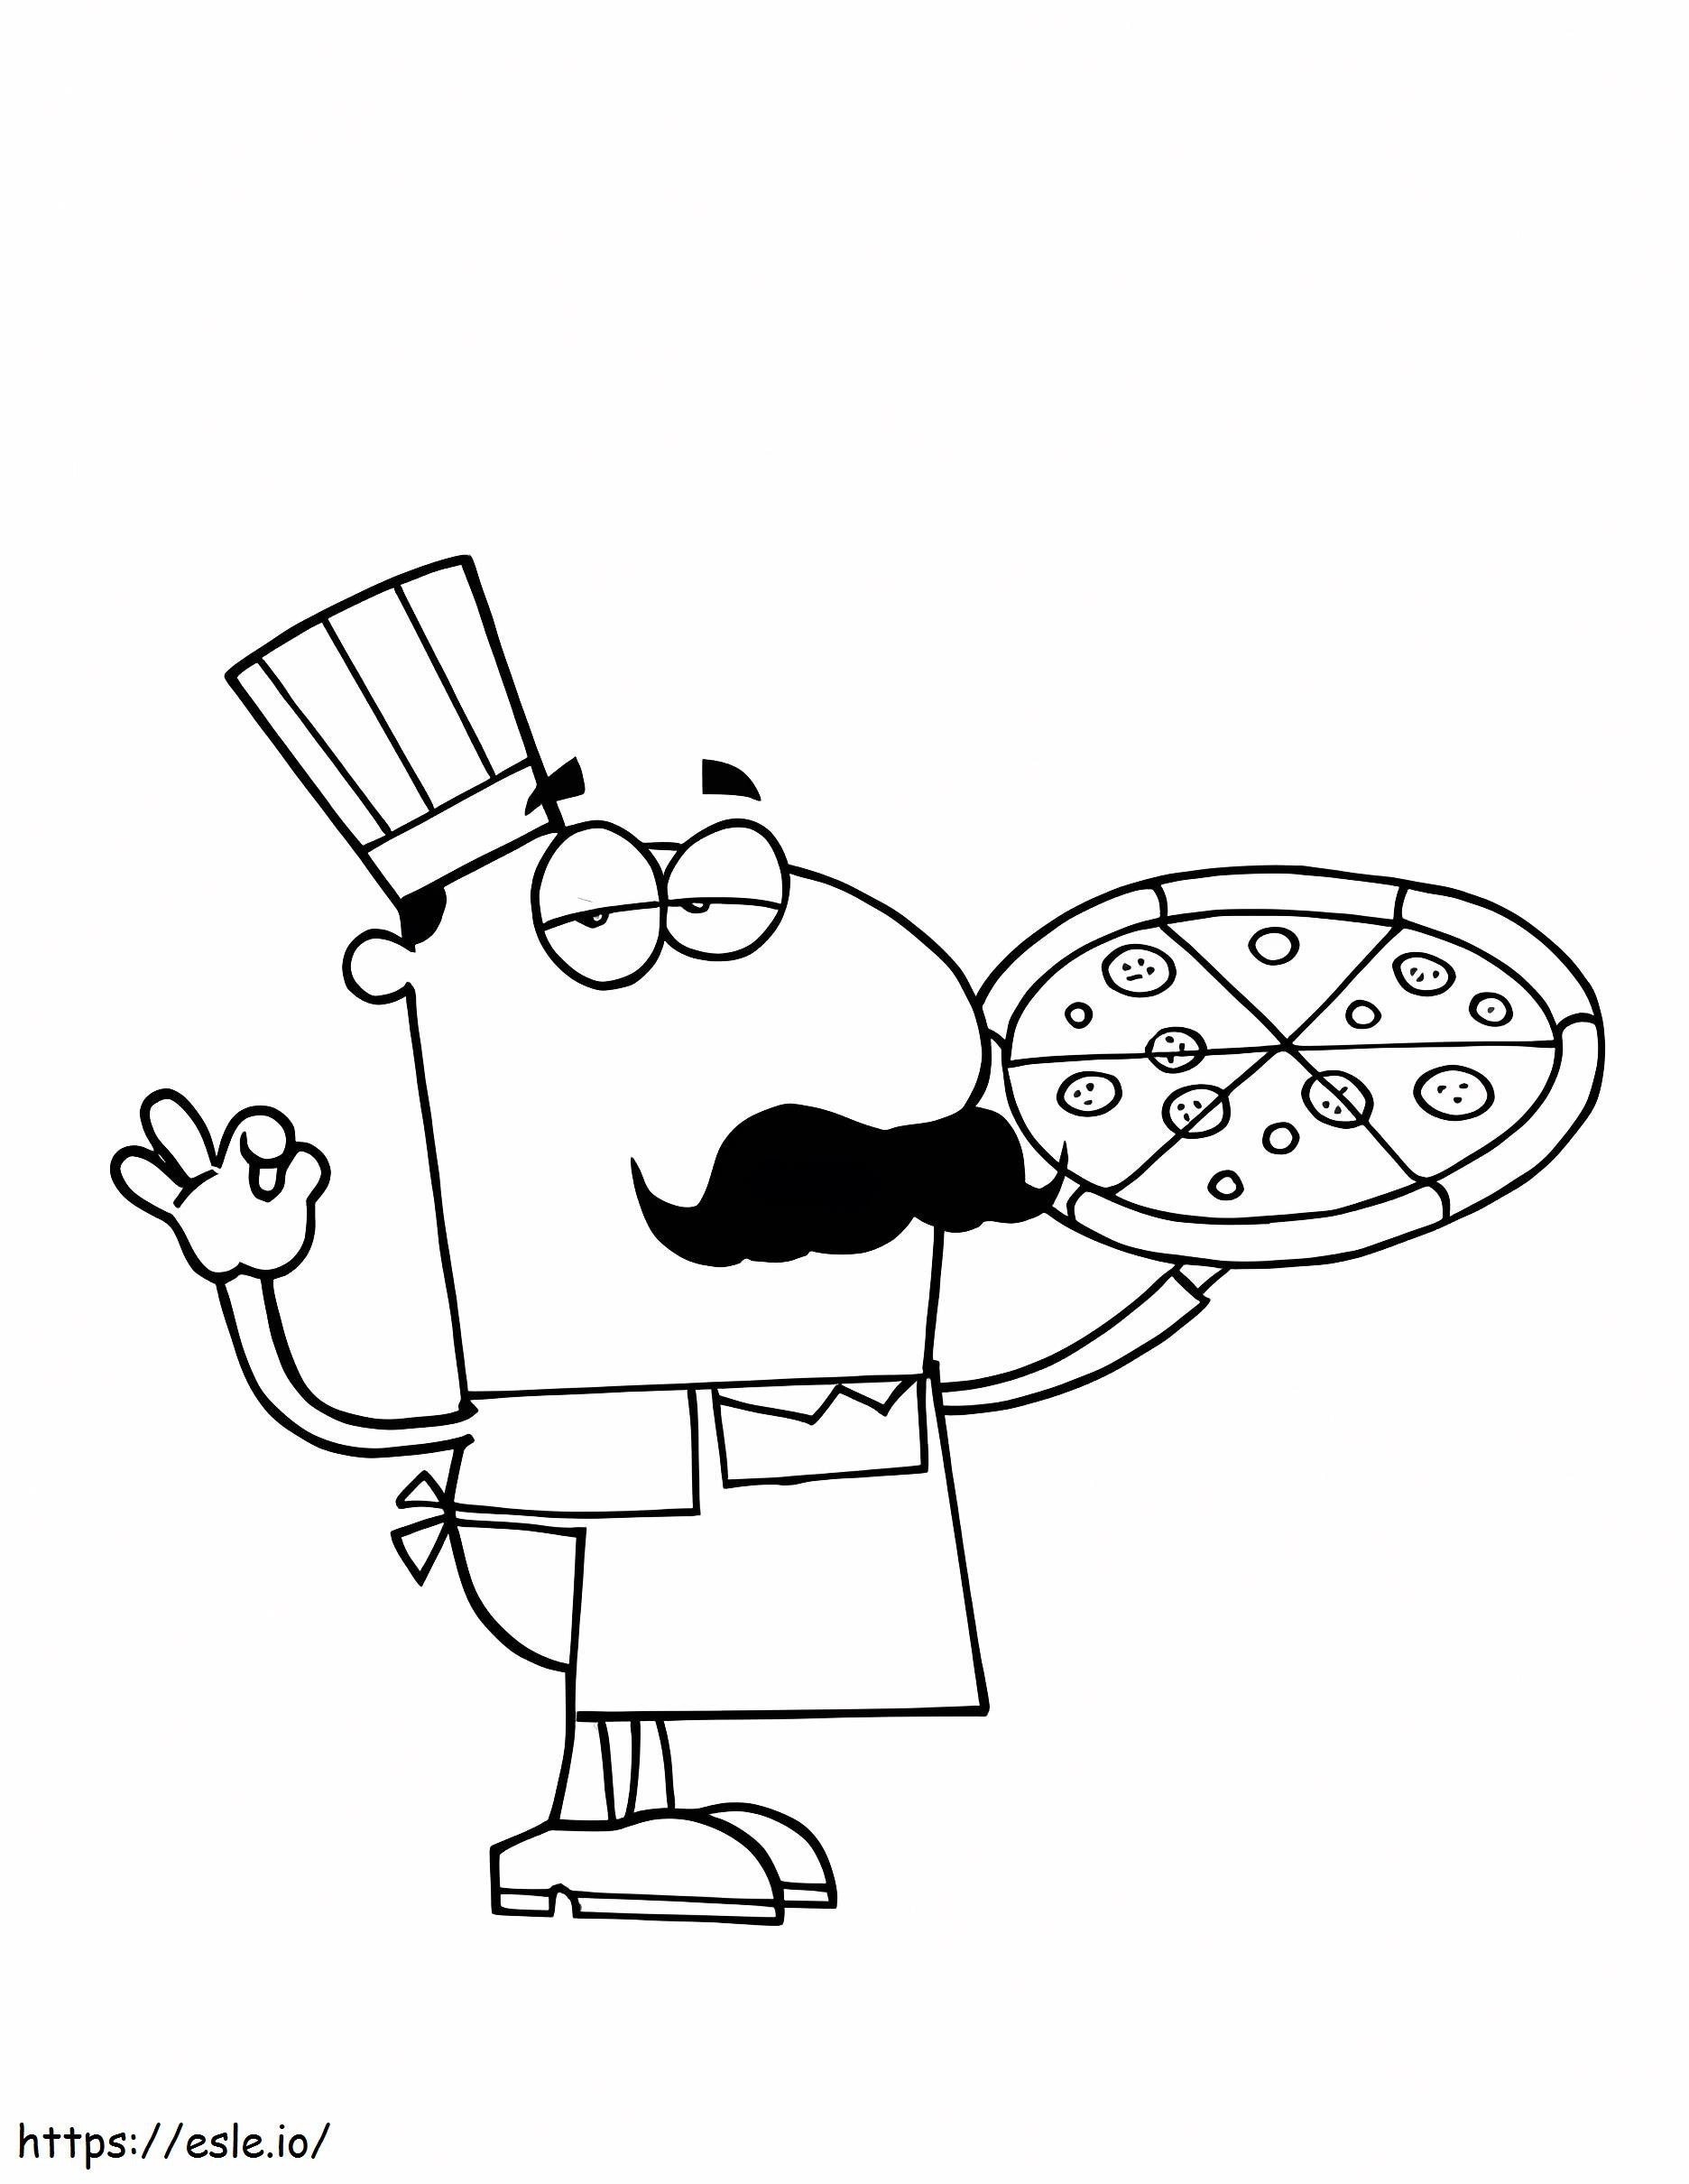 Şef Holding Pizza boyama